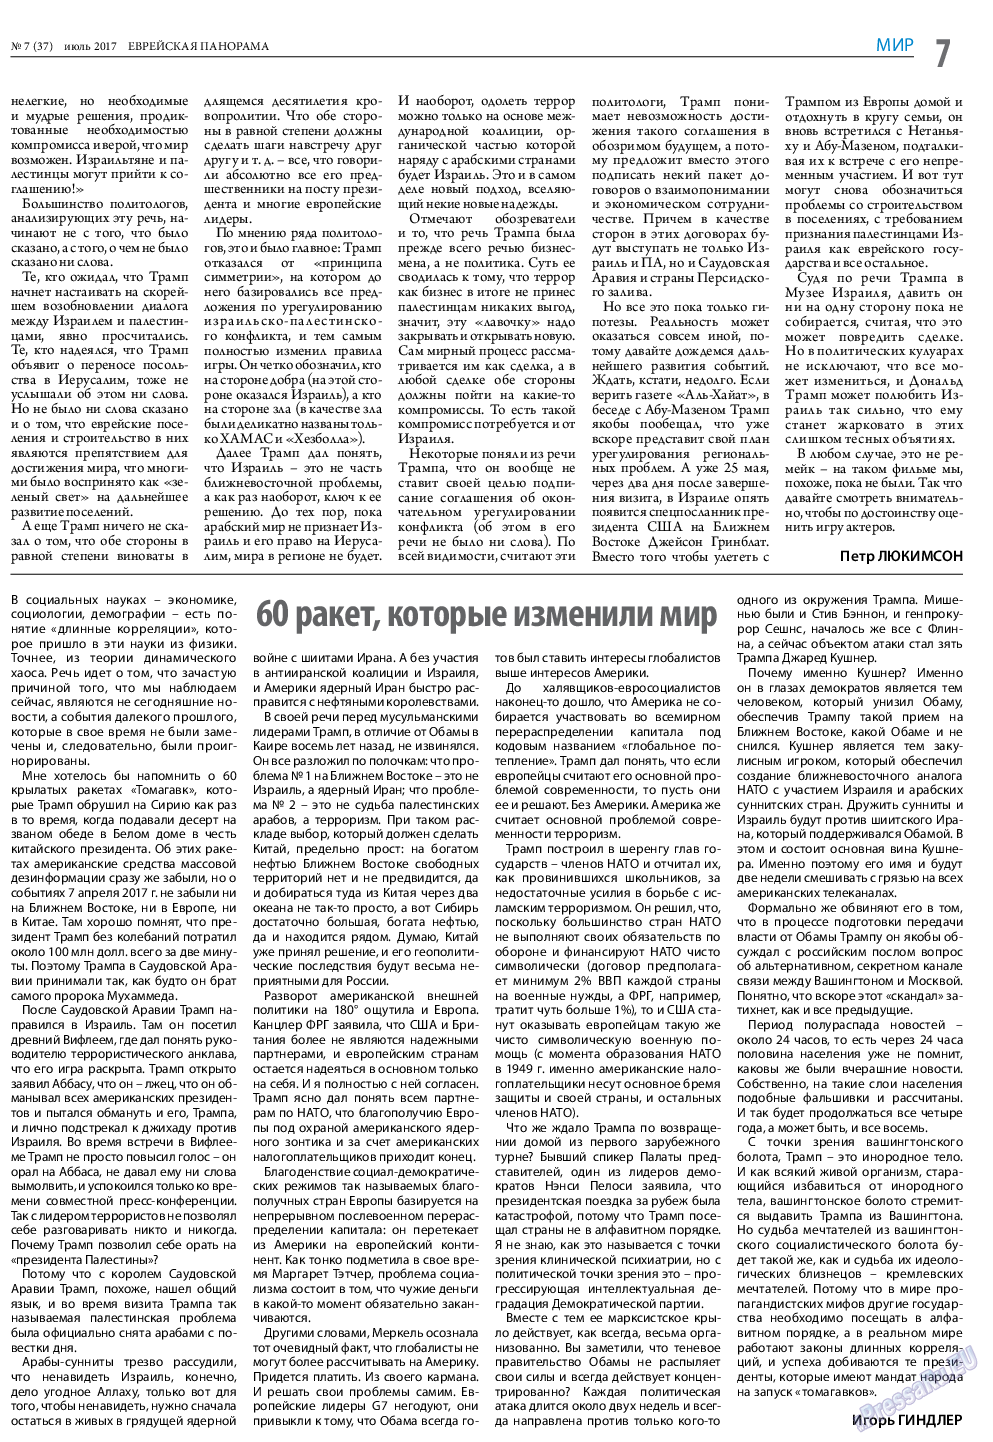 Еврейская панорама, газета. 2017 №7 стр.7